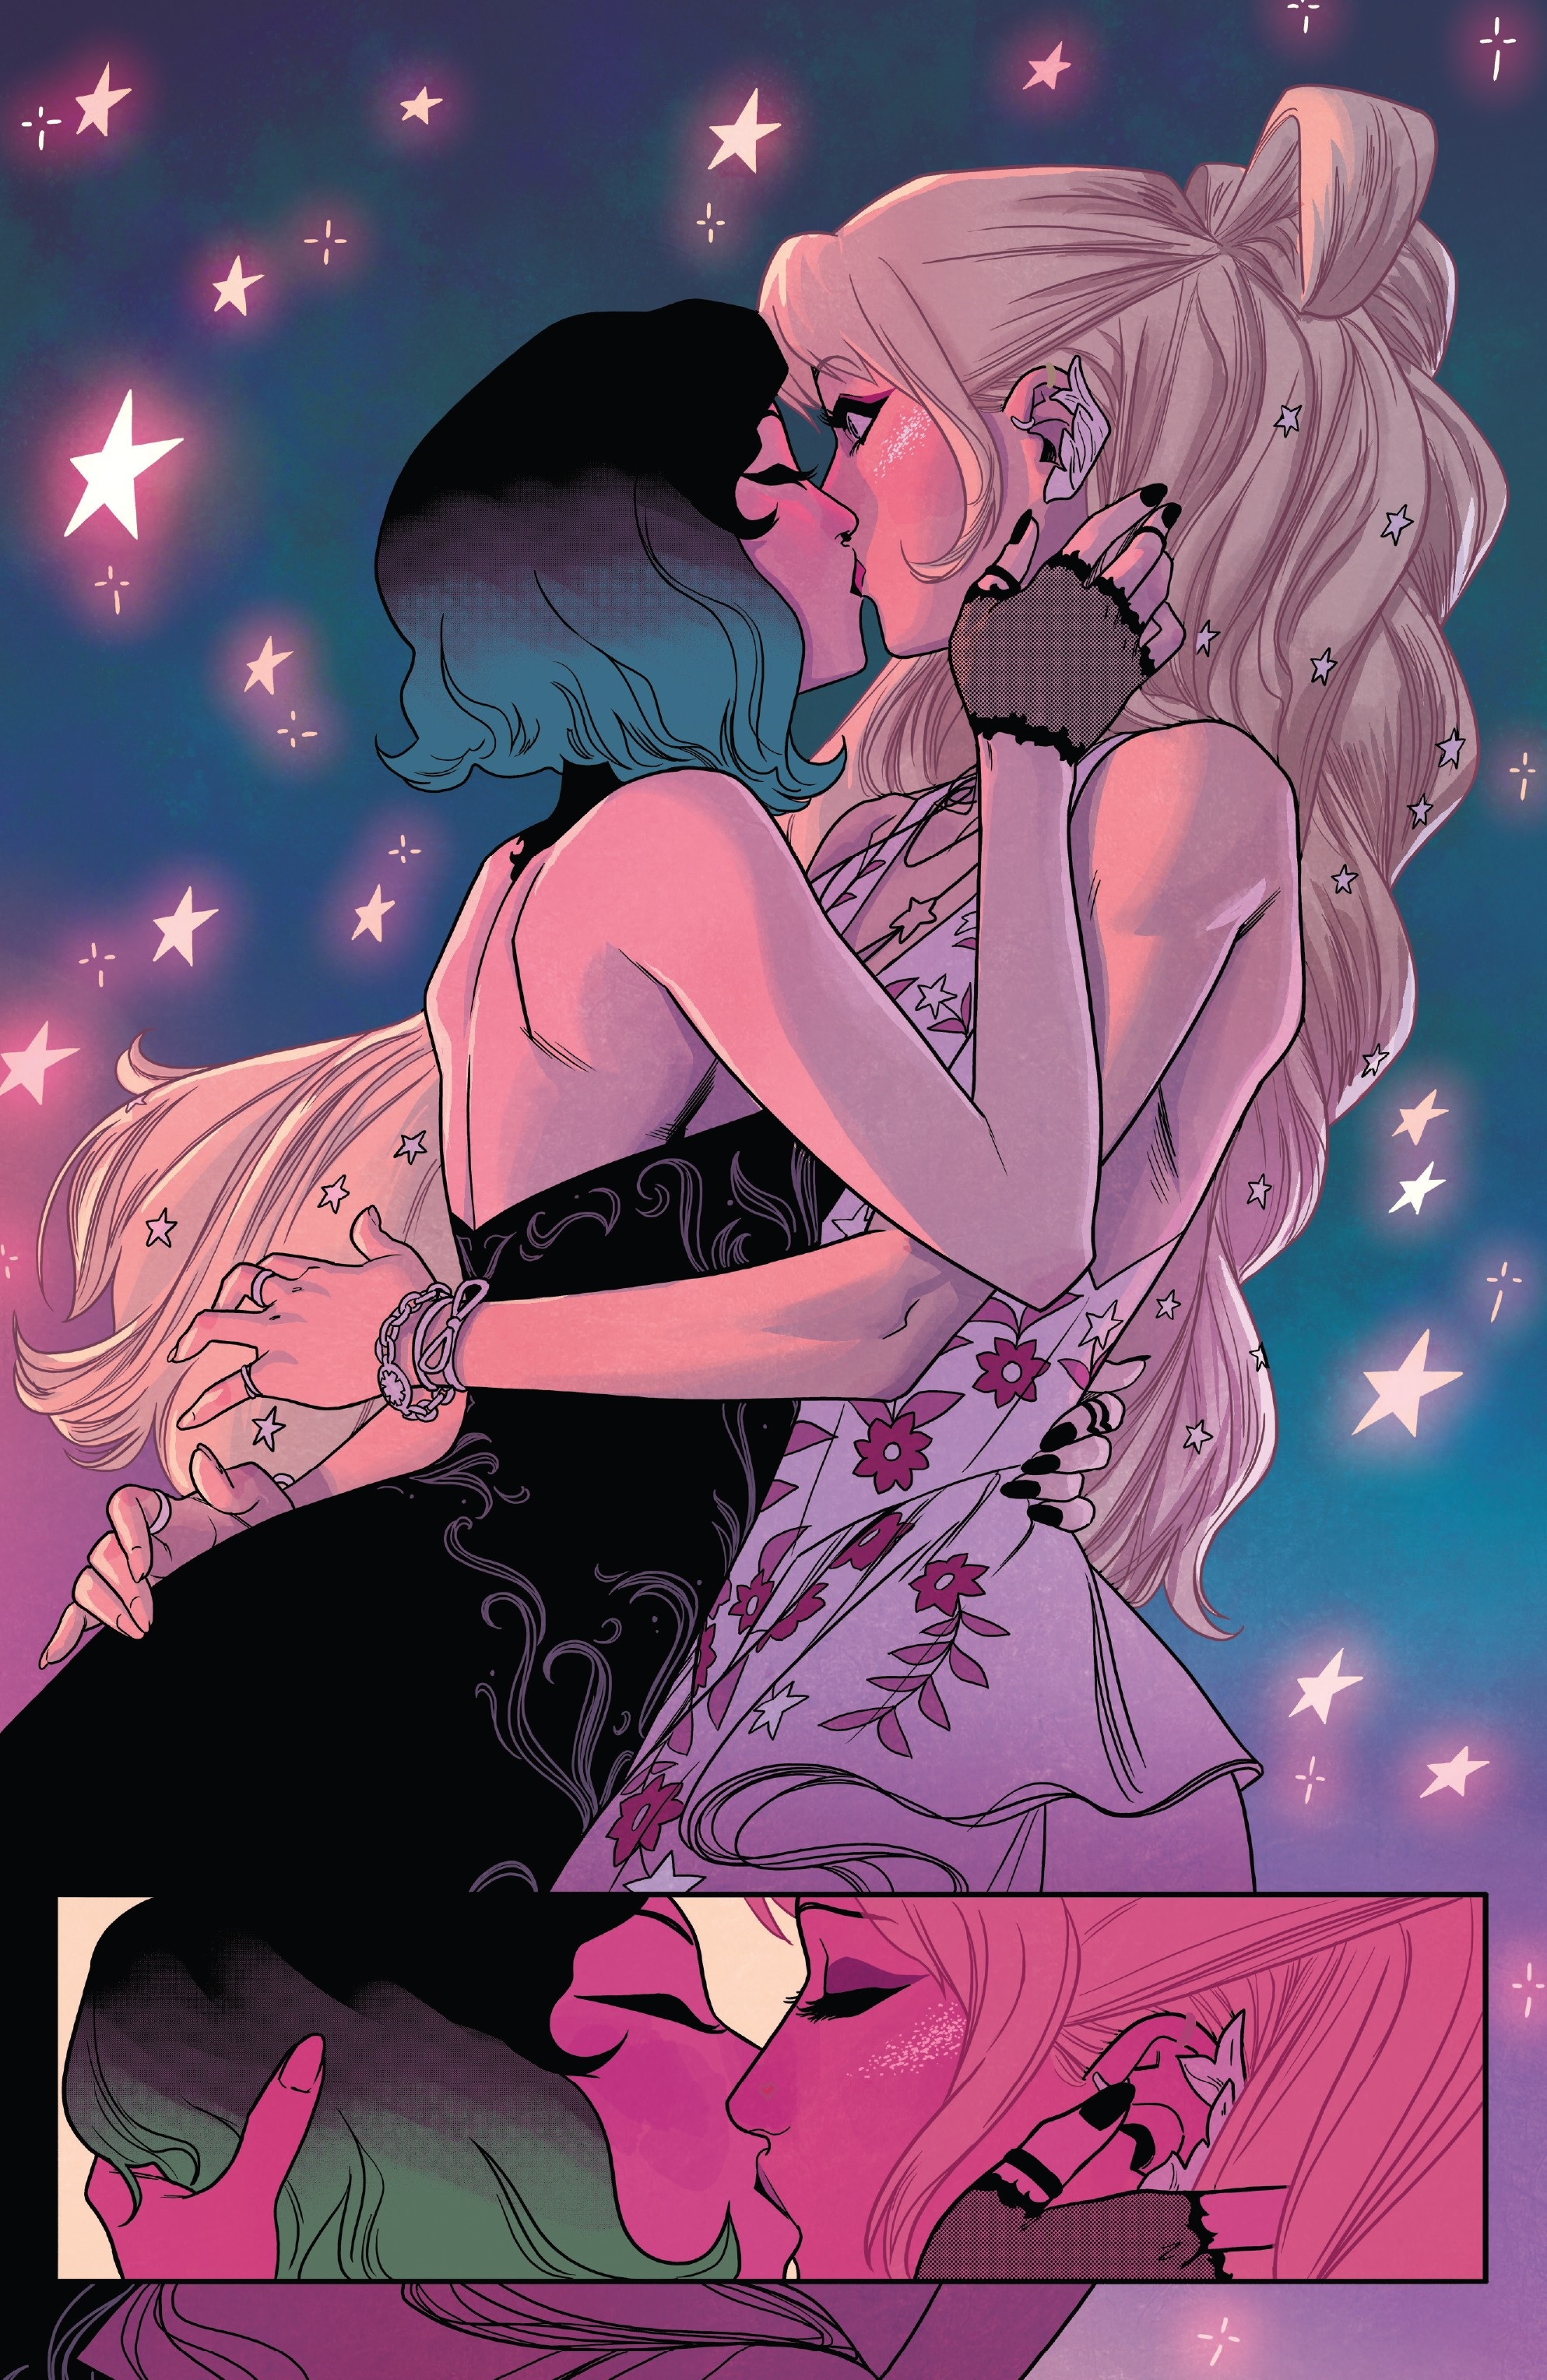 Lesbian page 1. Поцелуй арт. Поцелуй девушек арт. Фемслэш поцелуи. Фемслэш милые арты.